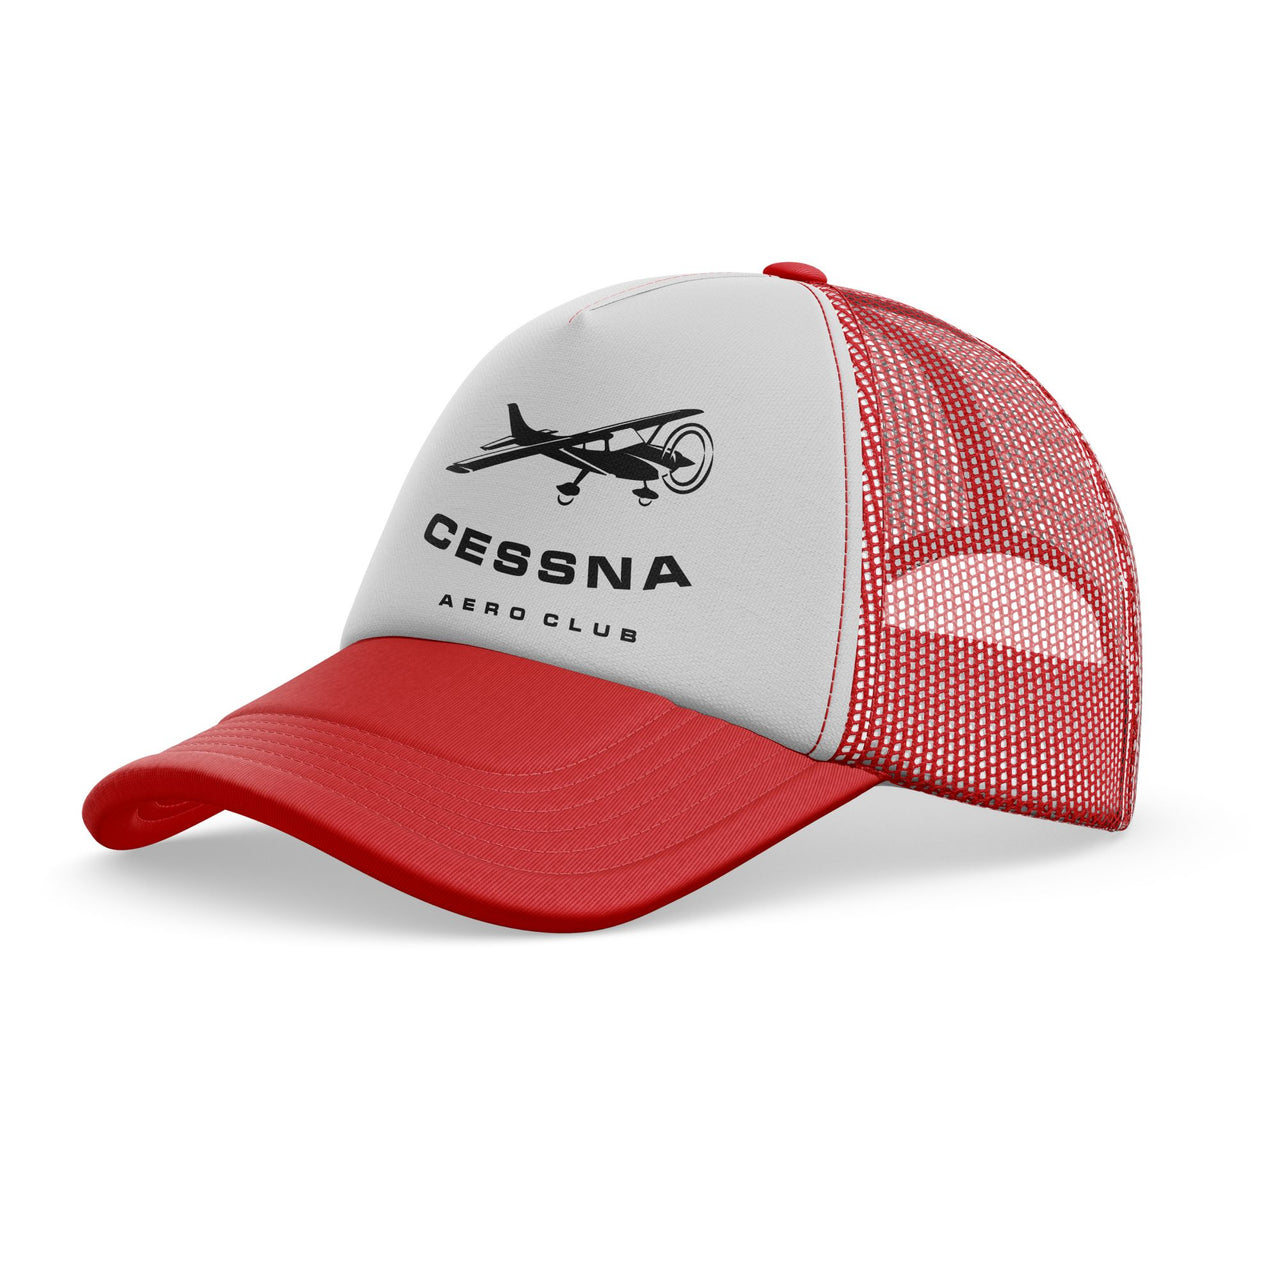 Cessna Aeroclub Designed Trucker Caps & Hats